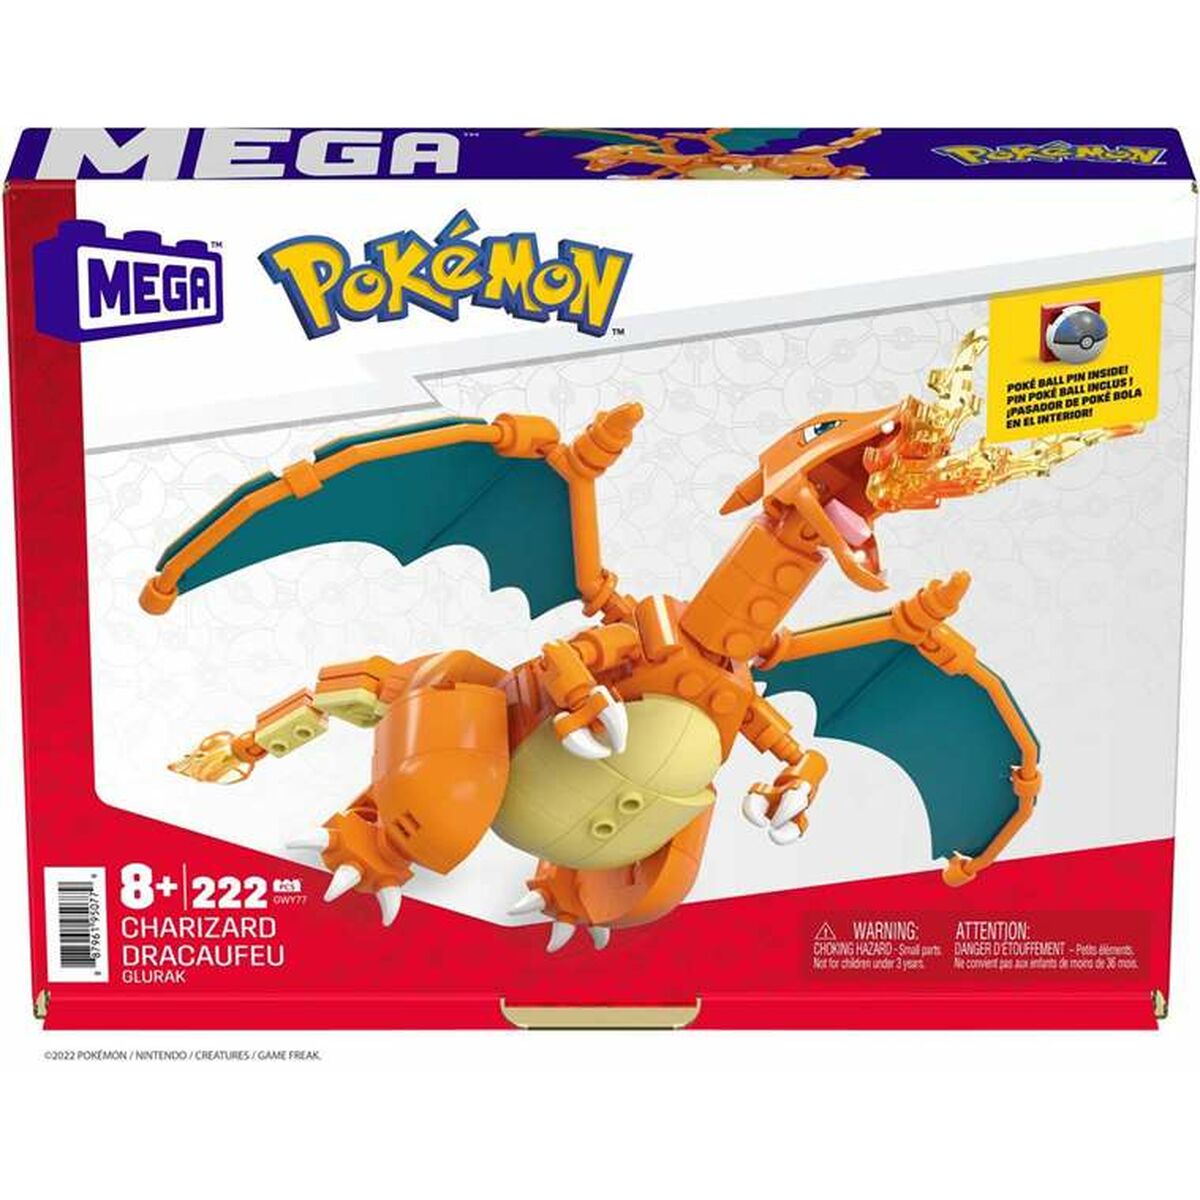 Construction set Pokémon Mega Charizard 222 Pieces